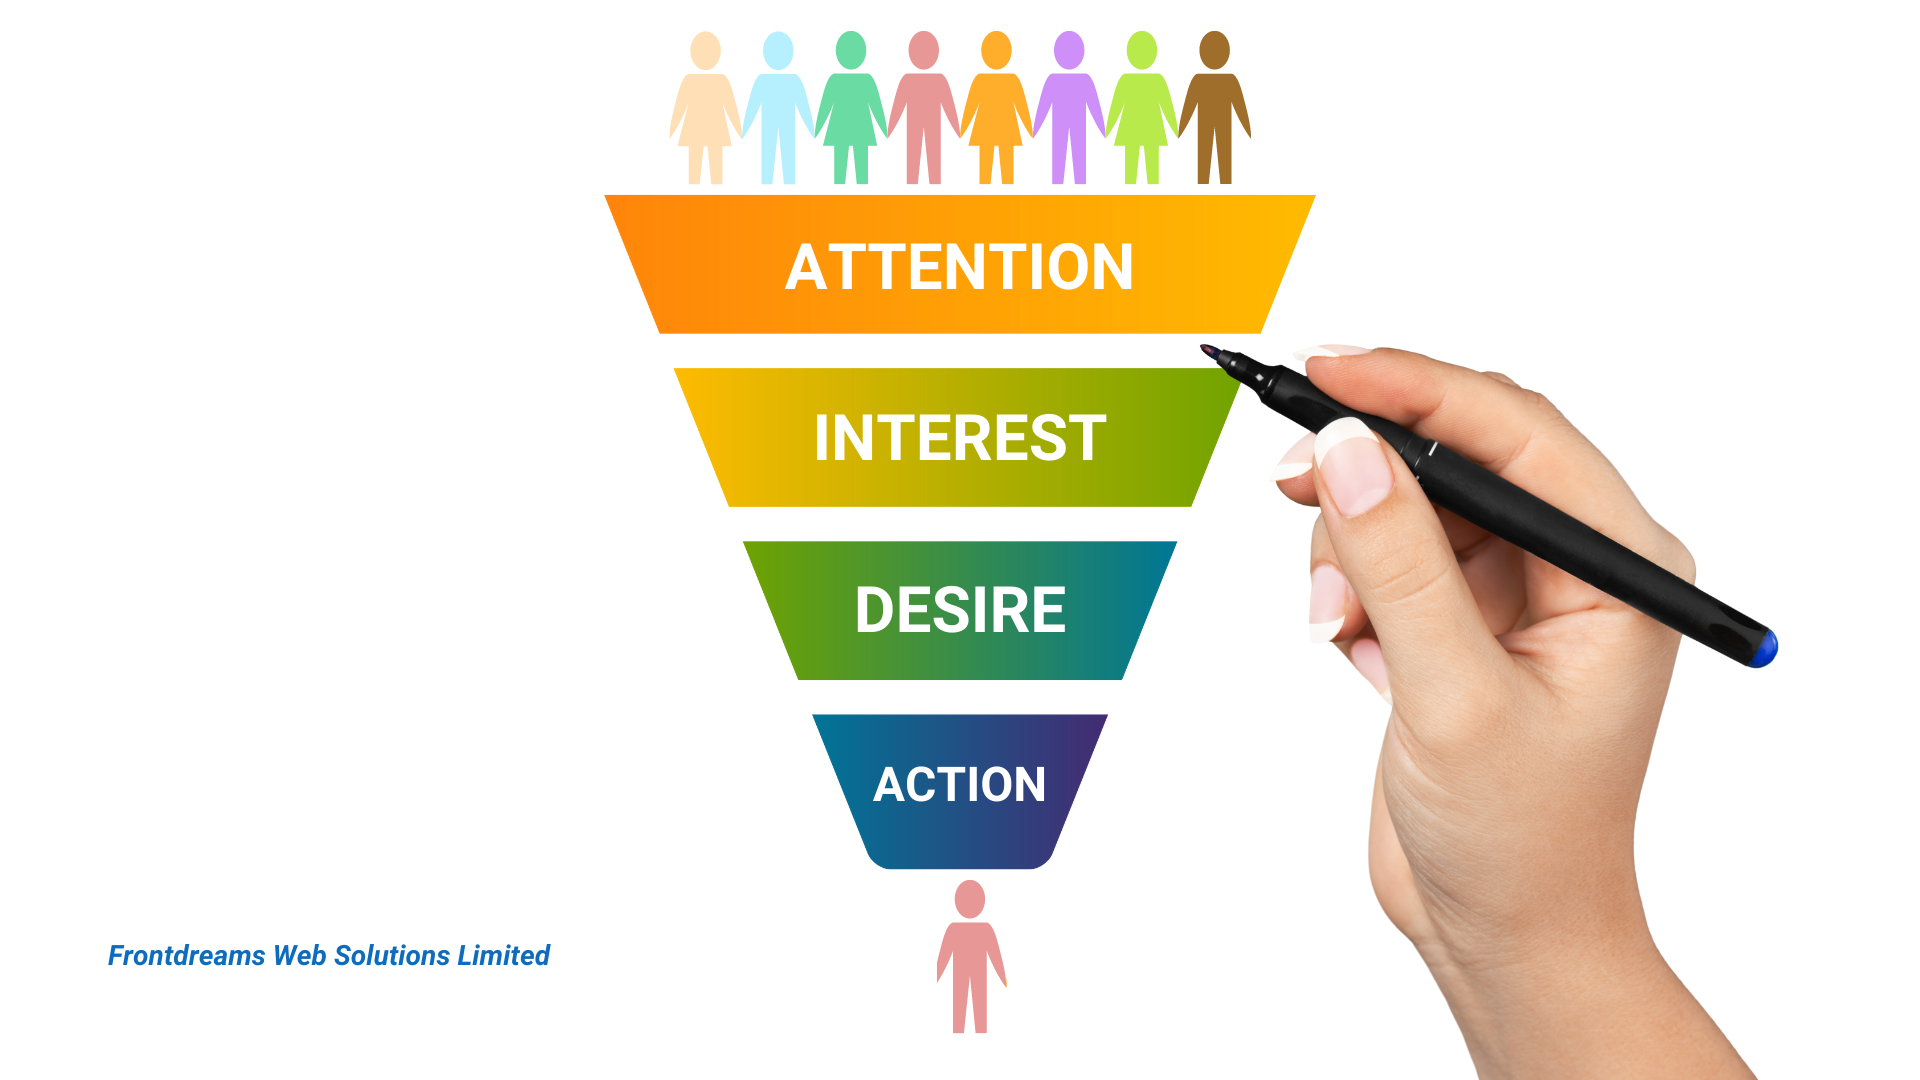 The AIDA (Attention, Interest, Desire, Action) Principle